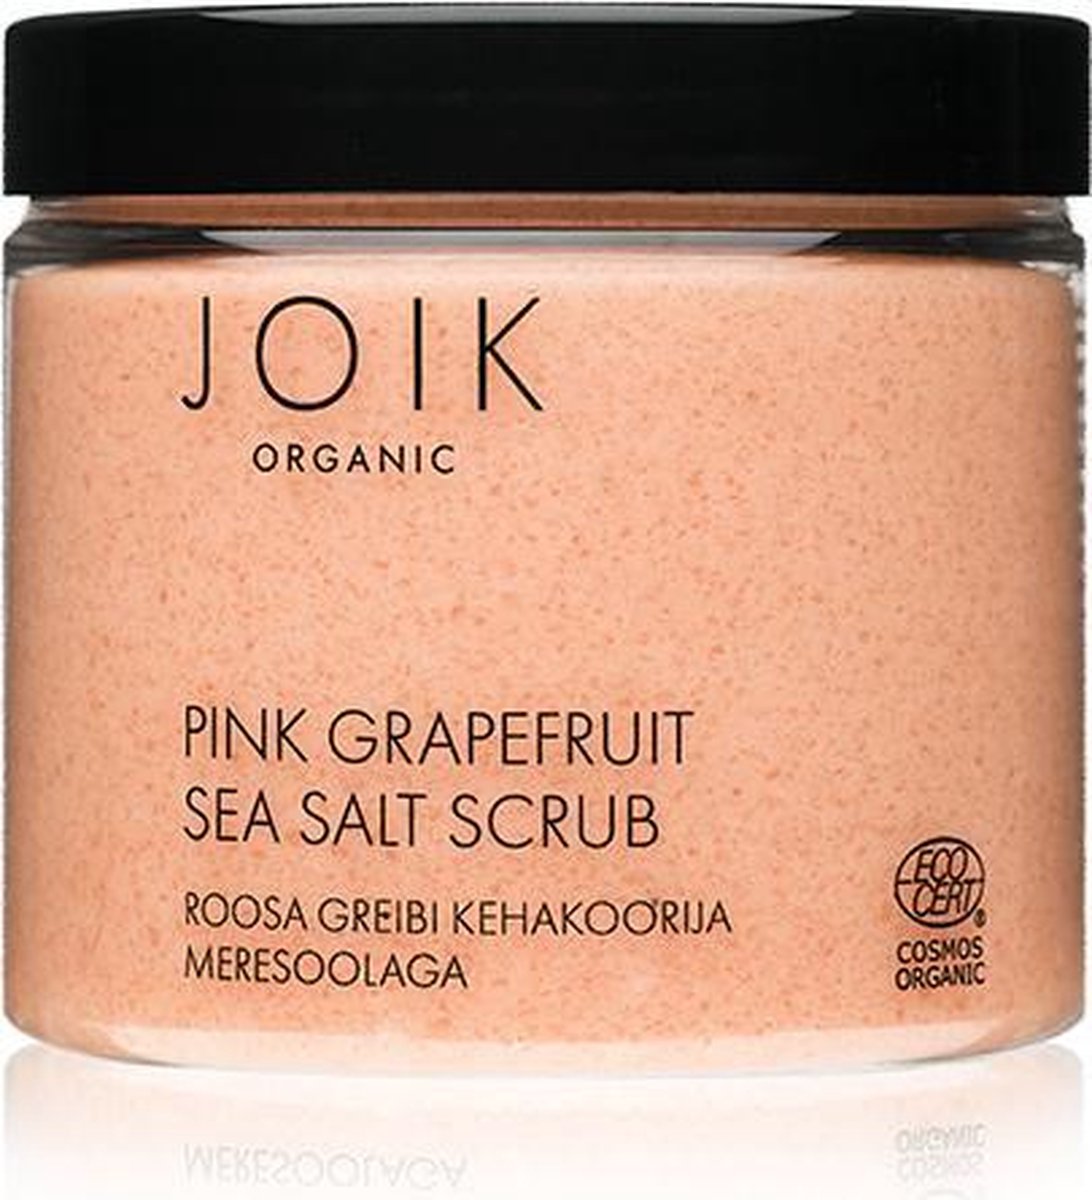 Sea salt scrub - Pink grapefruit- Joik Organic